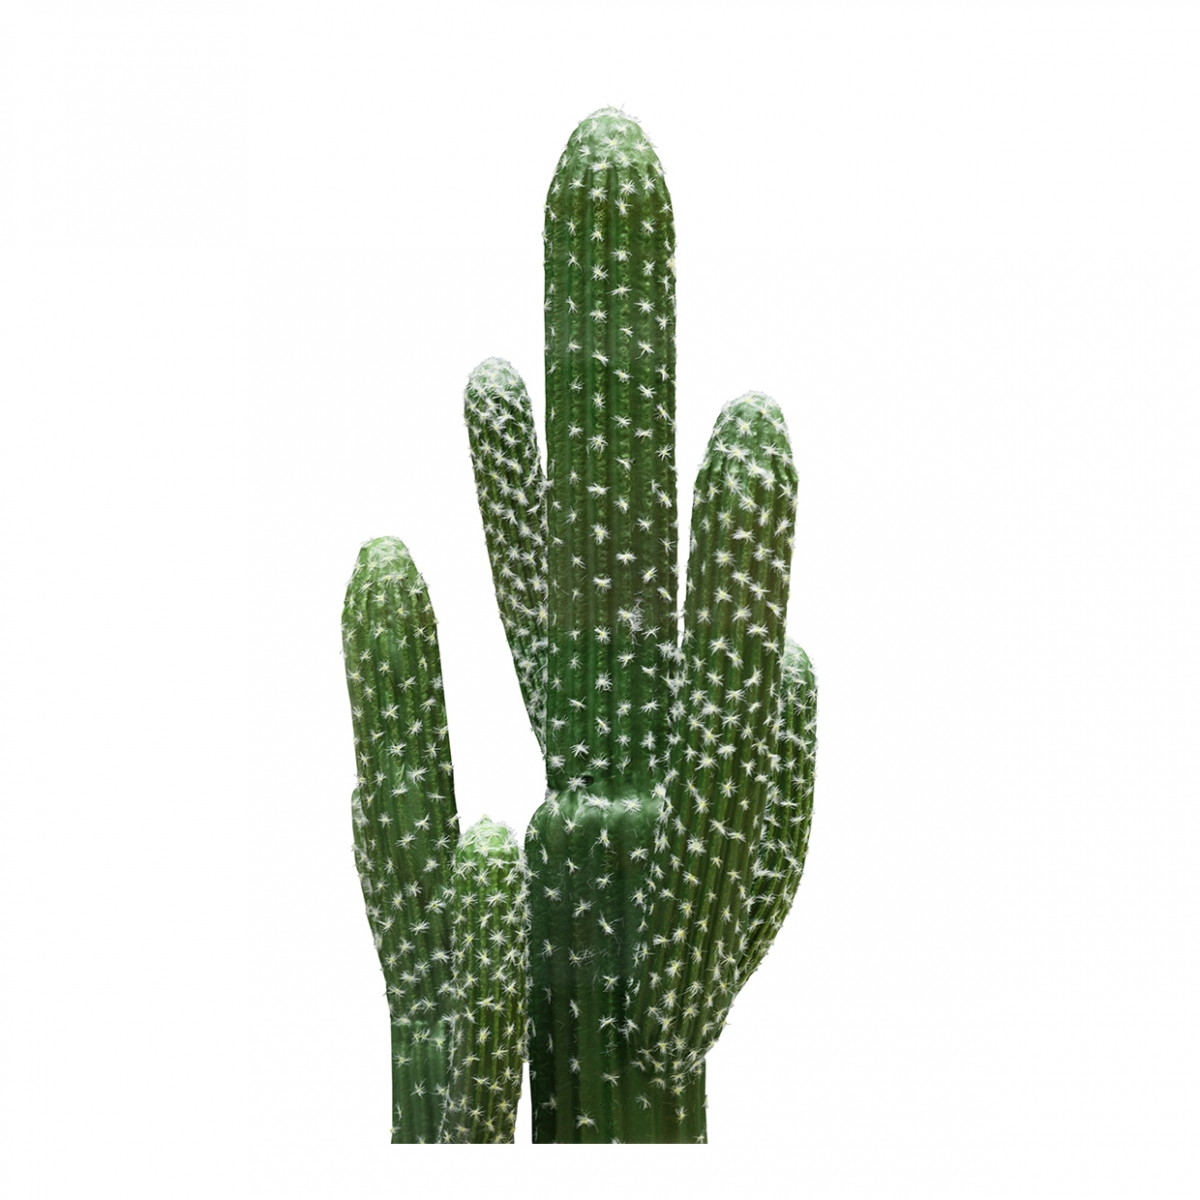 Imagen en la que se ve un cactus